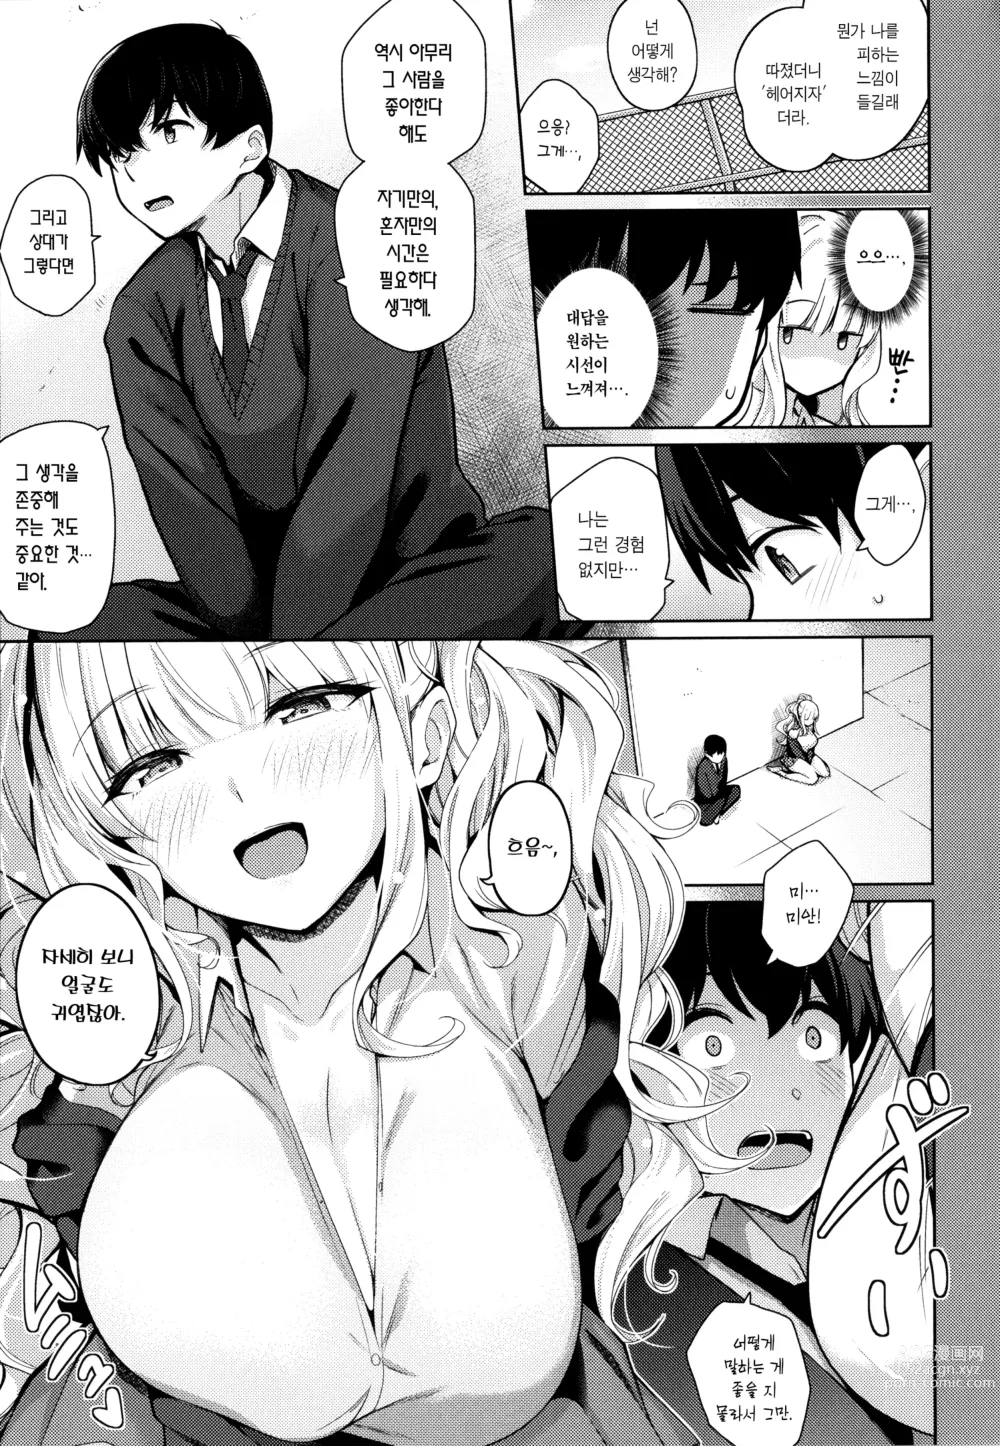 Page 13 of manga Kanojo wa Sukidarake